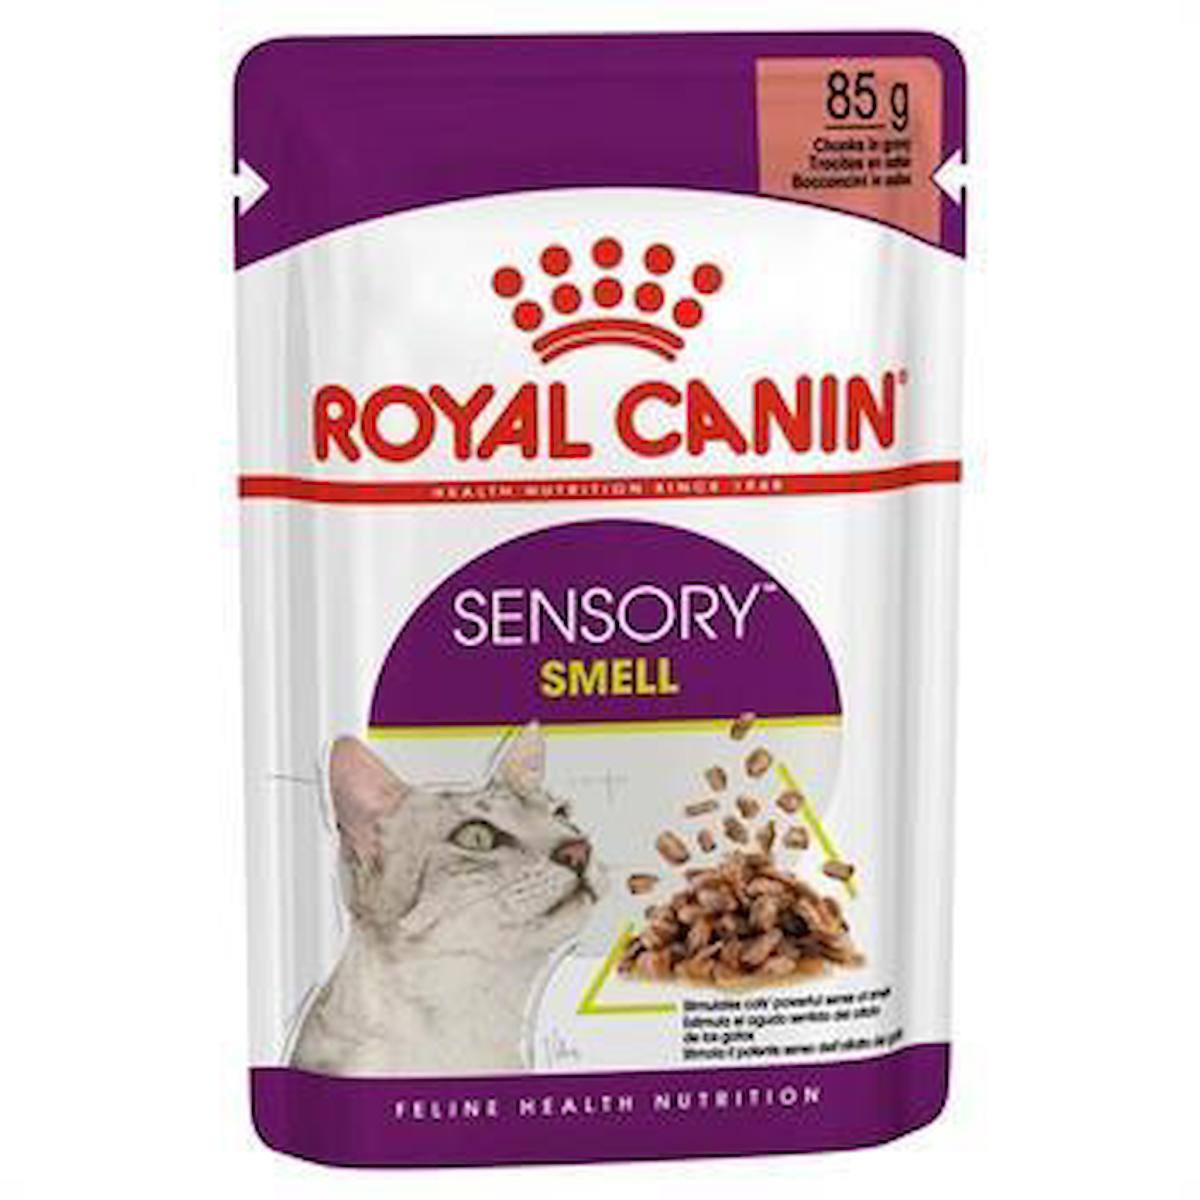 Royal Canin Sensory Etli Yetişkin Yaş Kedi Maması 85 gr